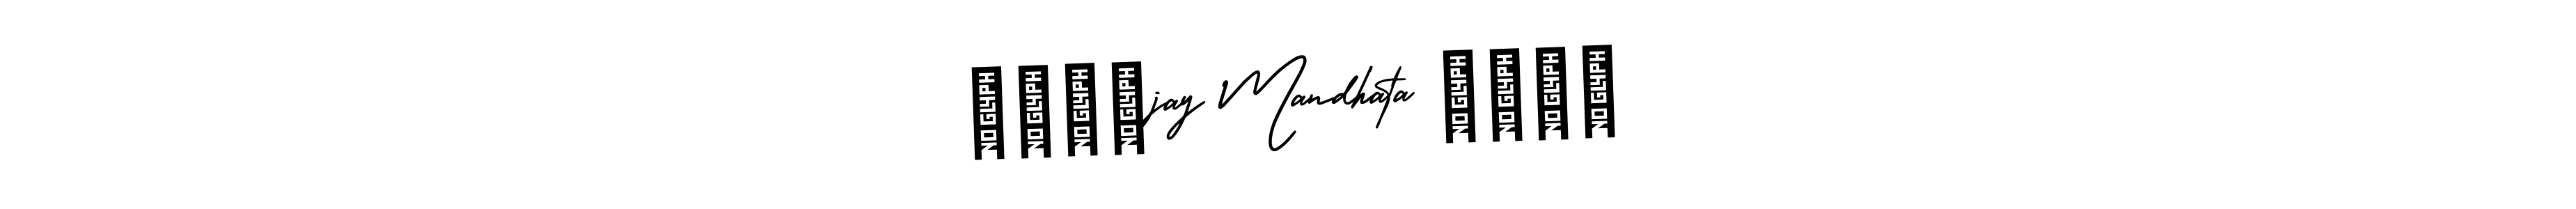 How to make ⚔️⚔️jay Mandhata ⚔️⚔️ signature? AmerikaSignatureDemo-Regular is a professional autograph style. Create handwritten signature for ⚔️⚔️jay Mandhata ⚔️⚔️ name. ⚔️⚔️jay Mandhata ⚔️⚔️ signature style 3 images and pictures png